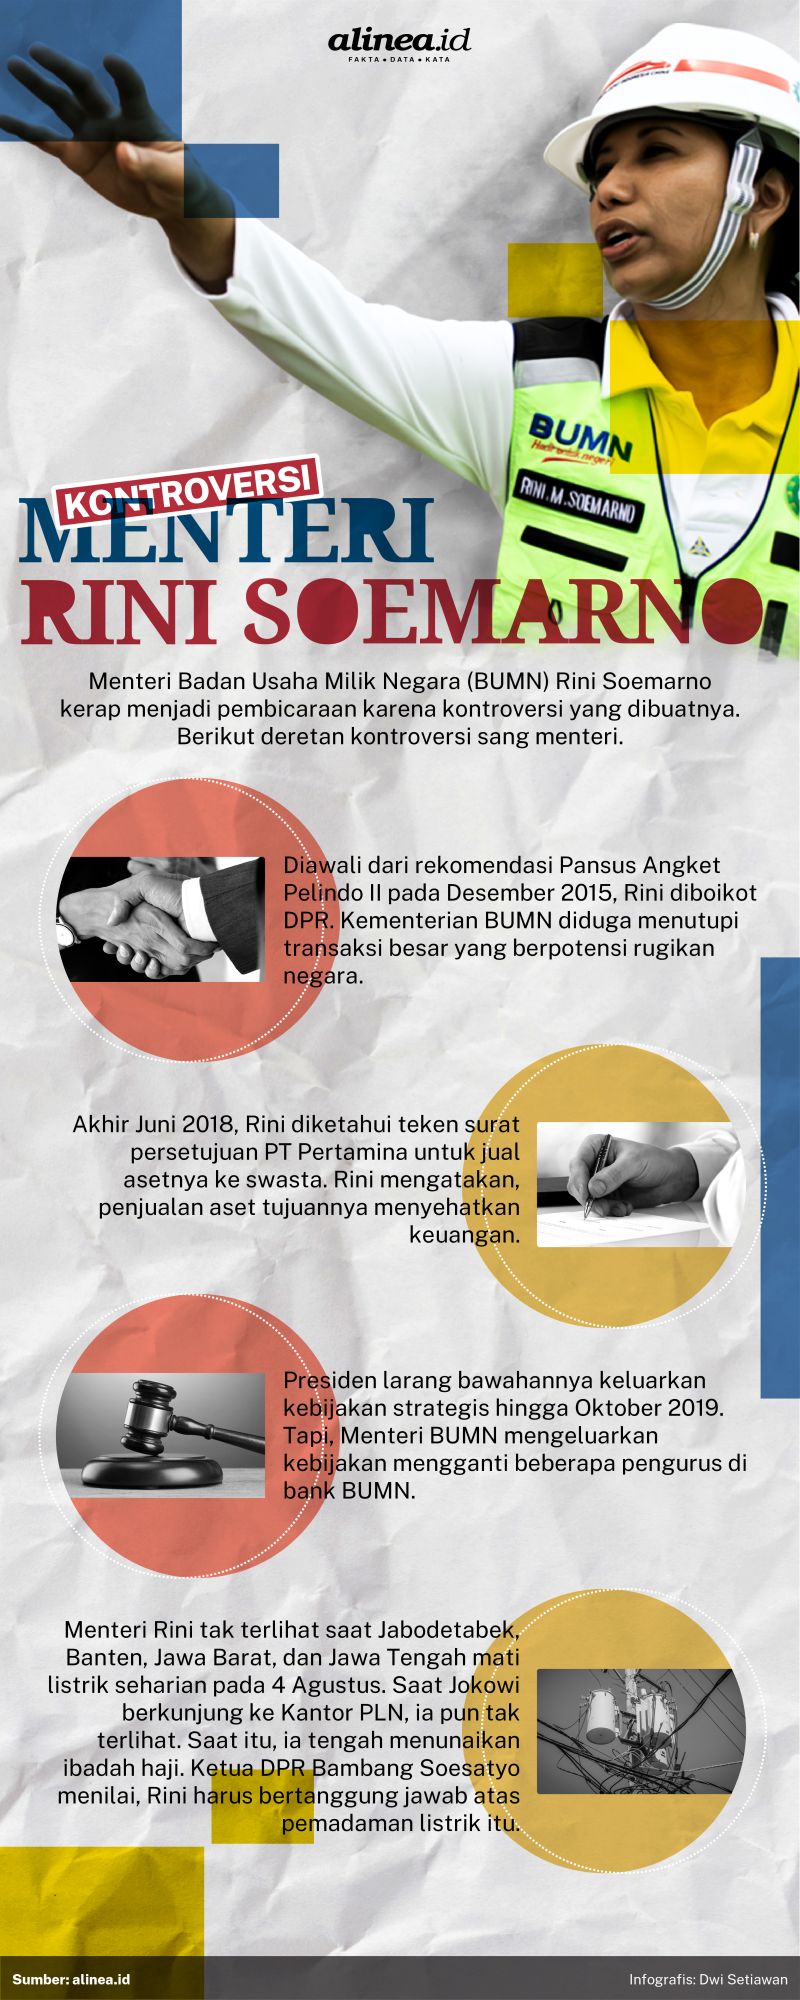 Rini Soemarno dinilai kontroversial dengan langkah dan keputusannya. Alinea.id/Dwi Setiawan.